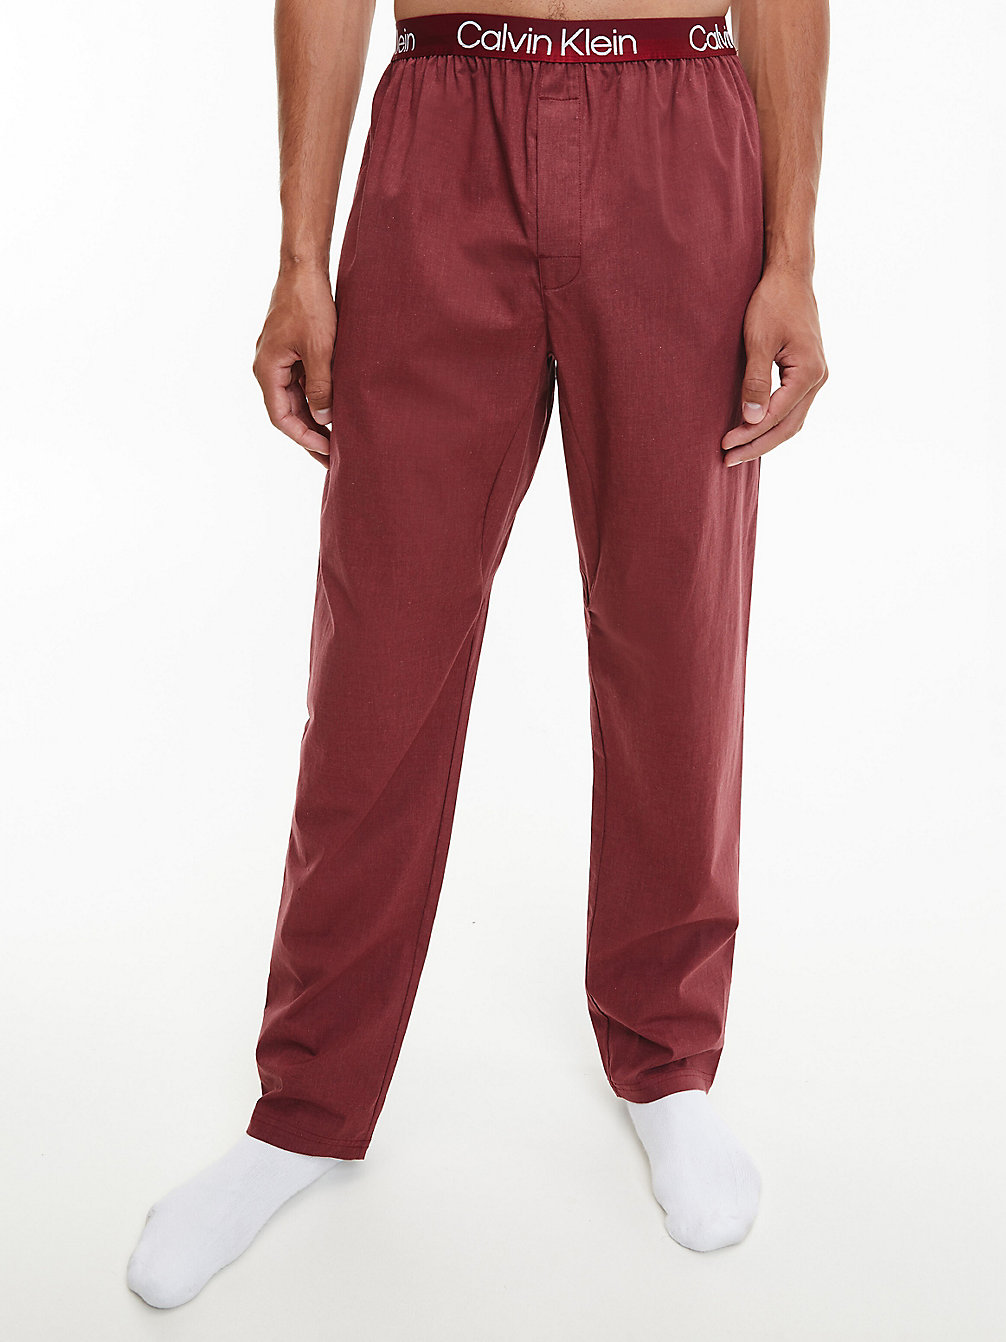 RED CARPET HEATHER Pyjama Pants - Modern Structure undefined men Calvin Klein